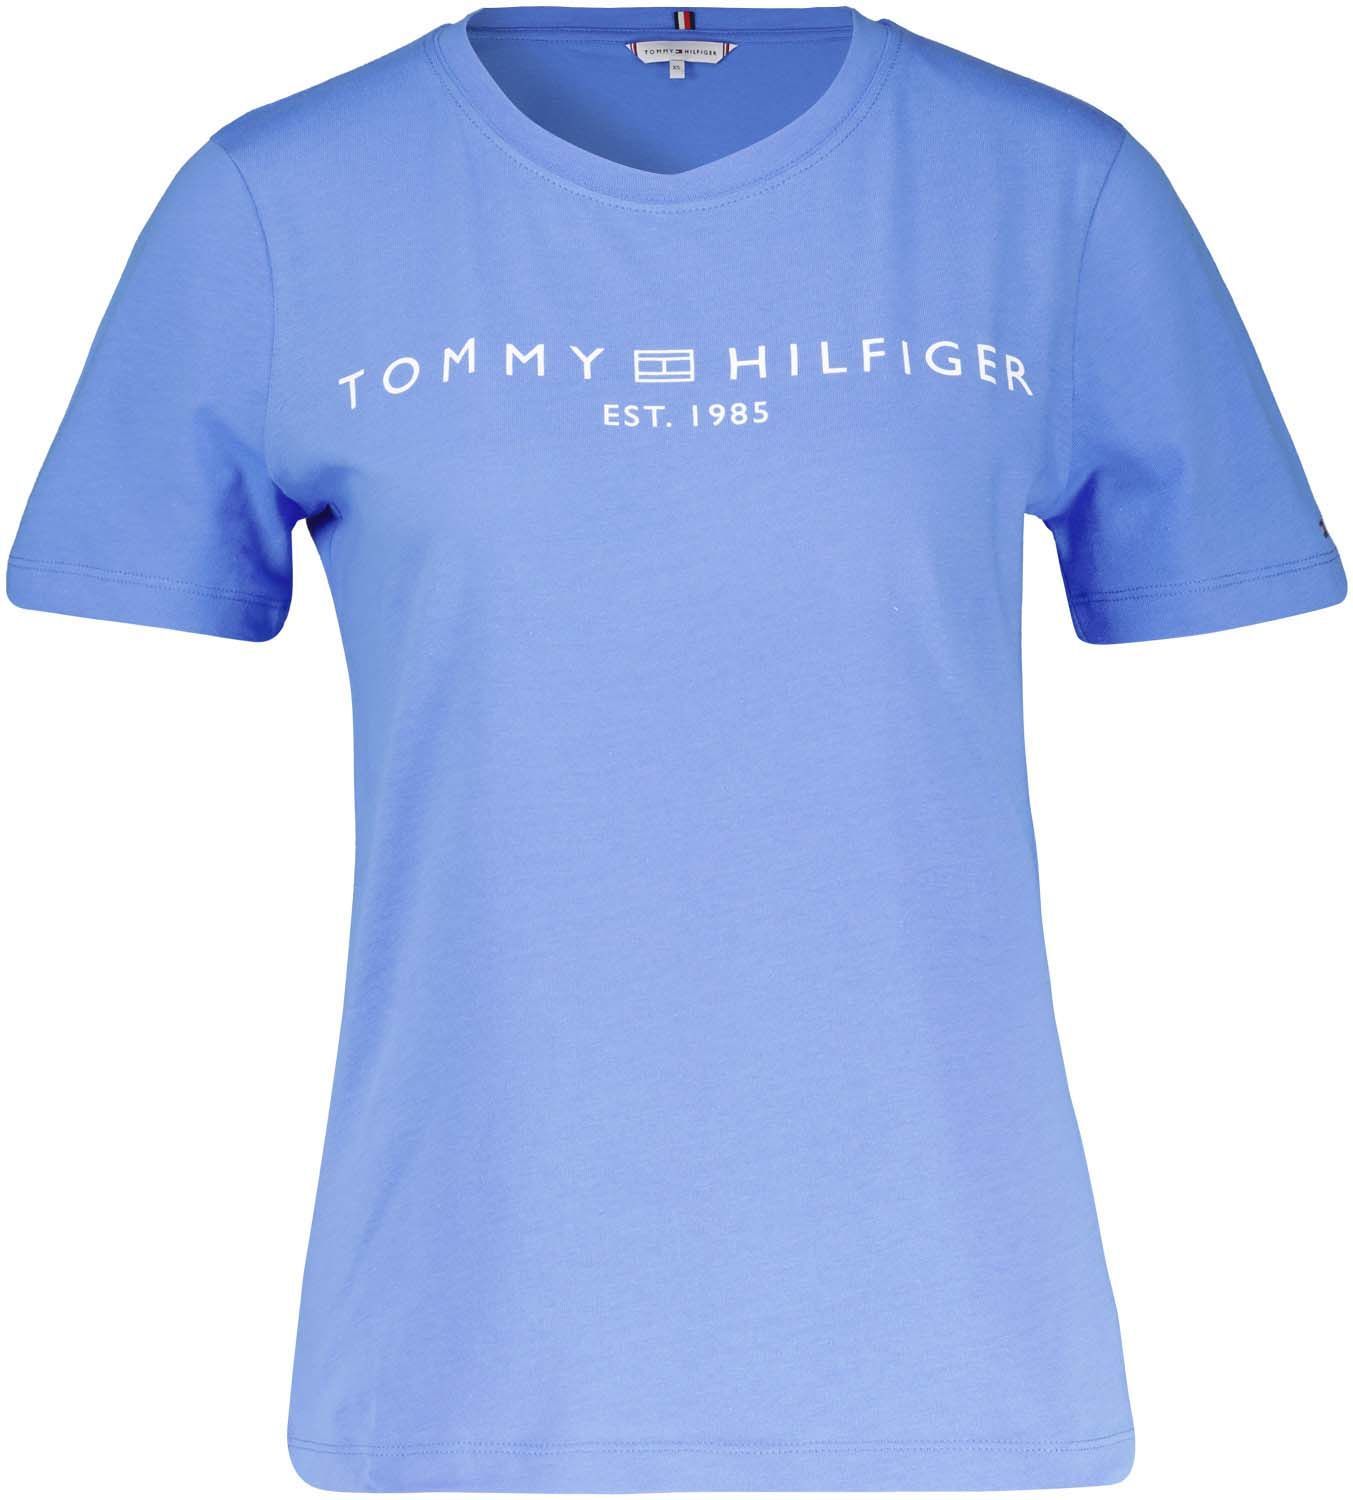 Tommy Hilfiger T-Shirt Blauw